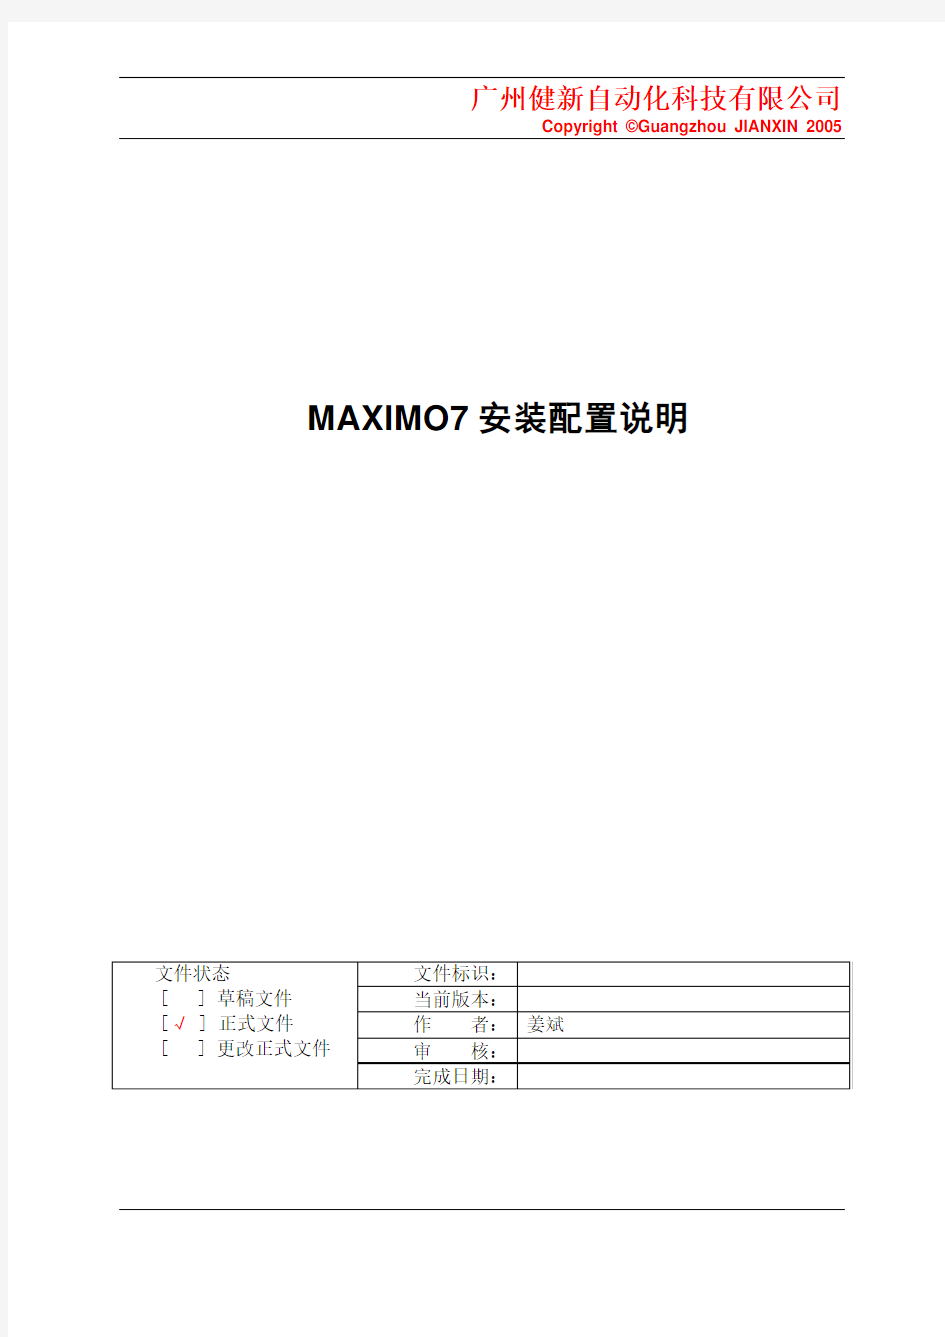 Maximo7安装配置说明书